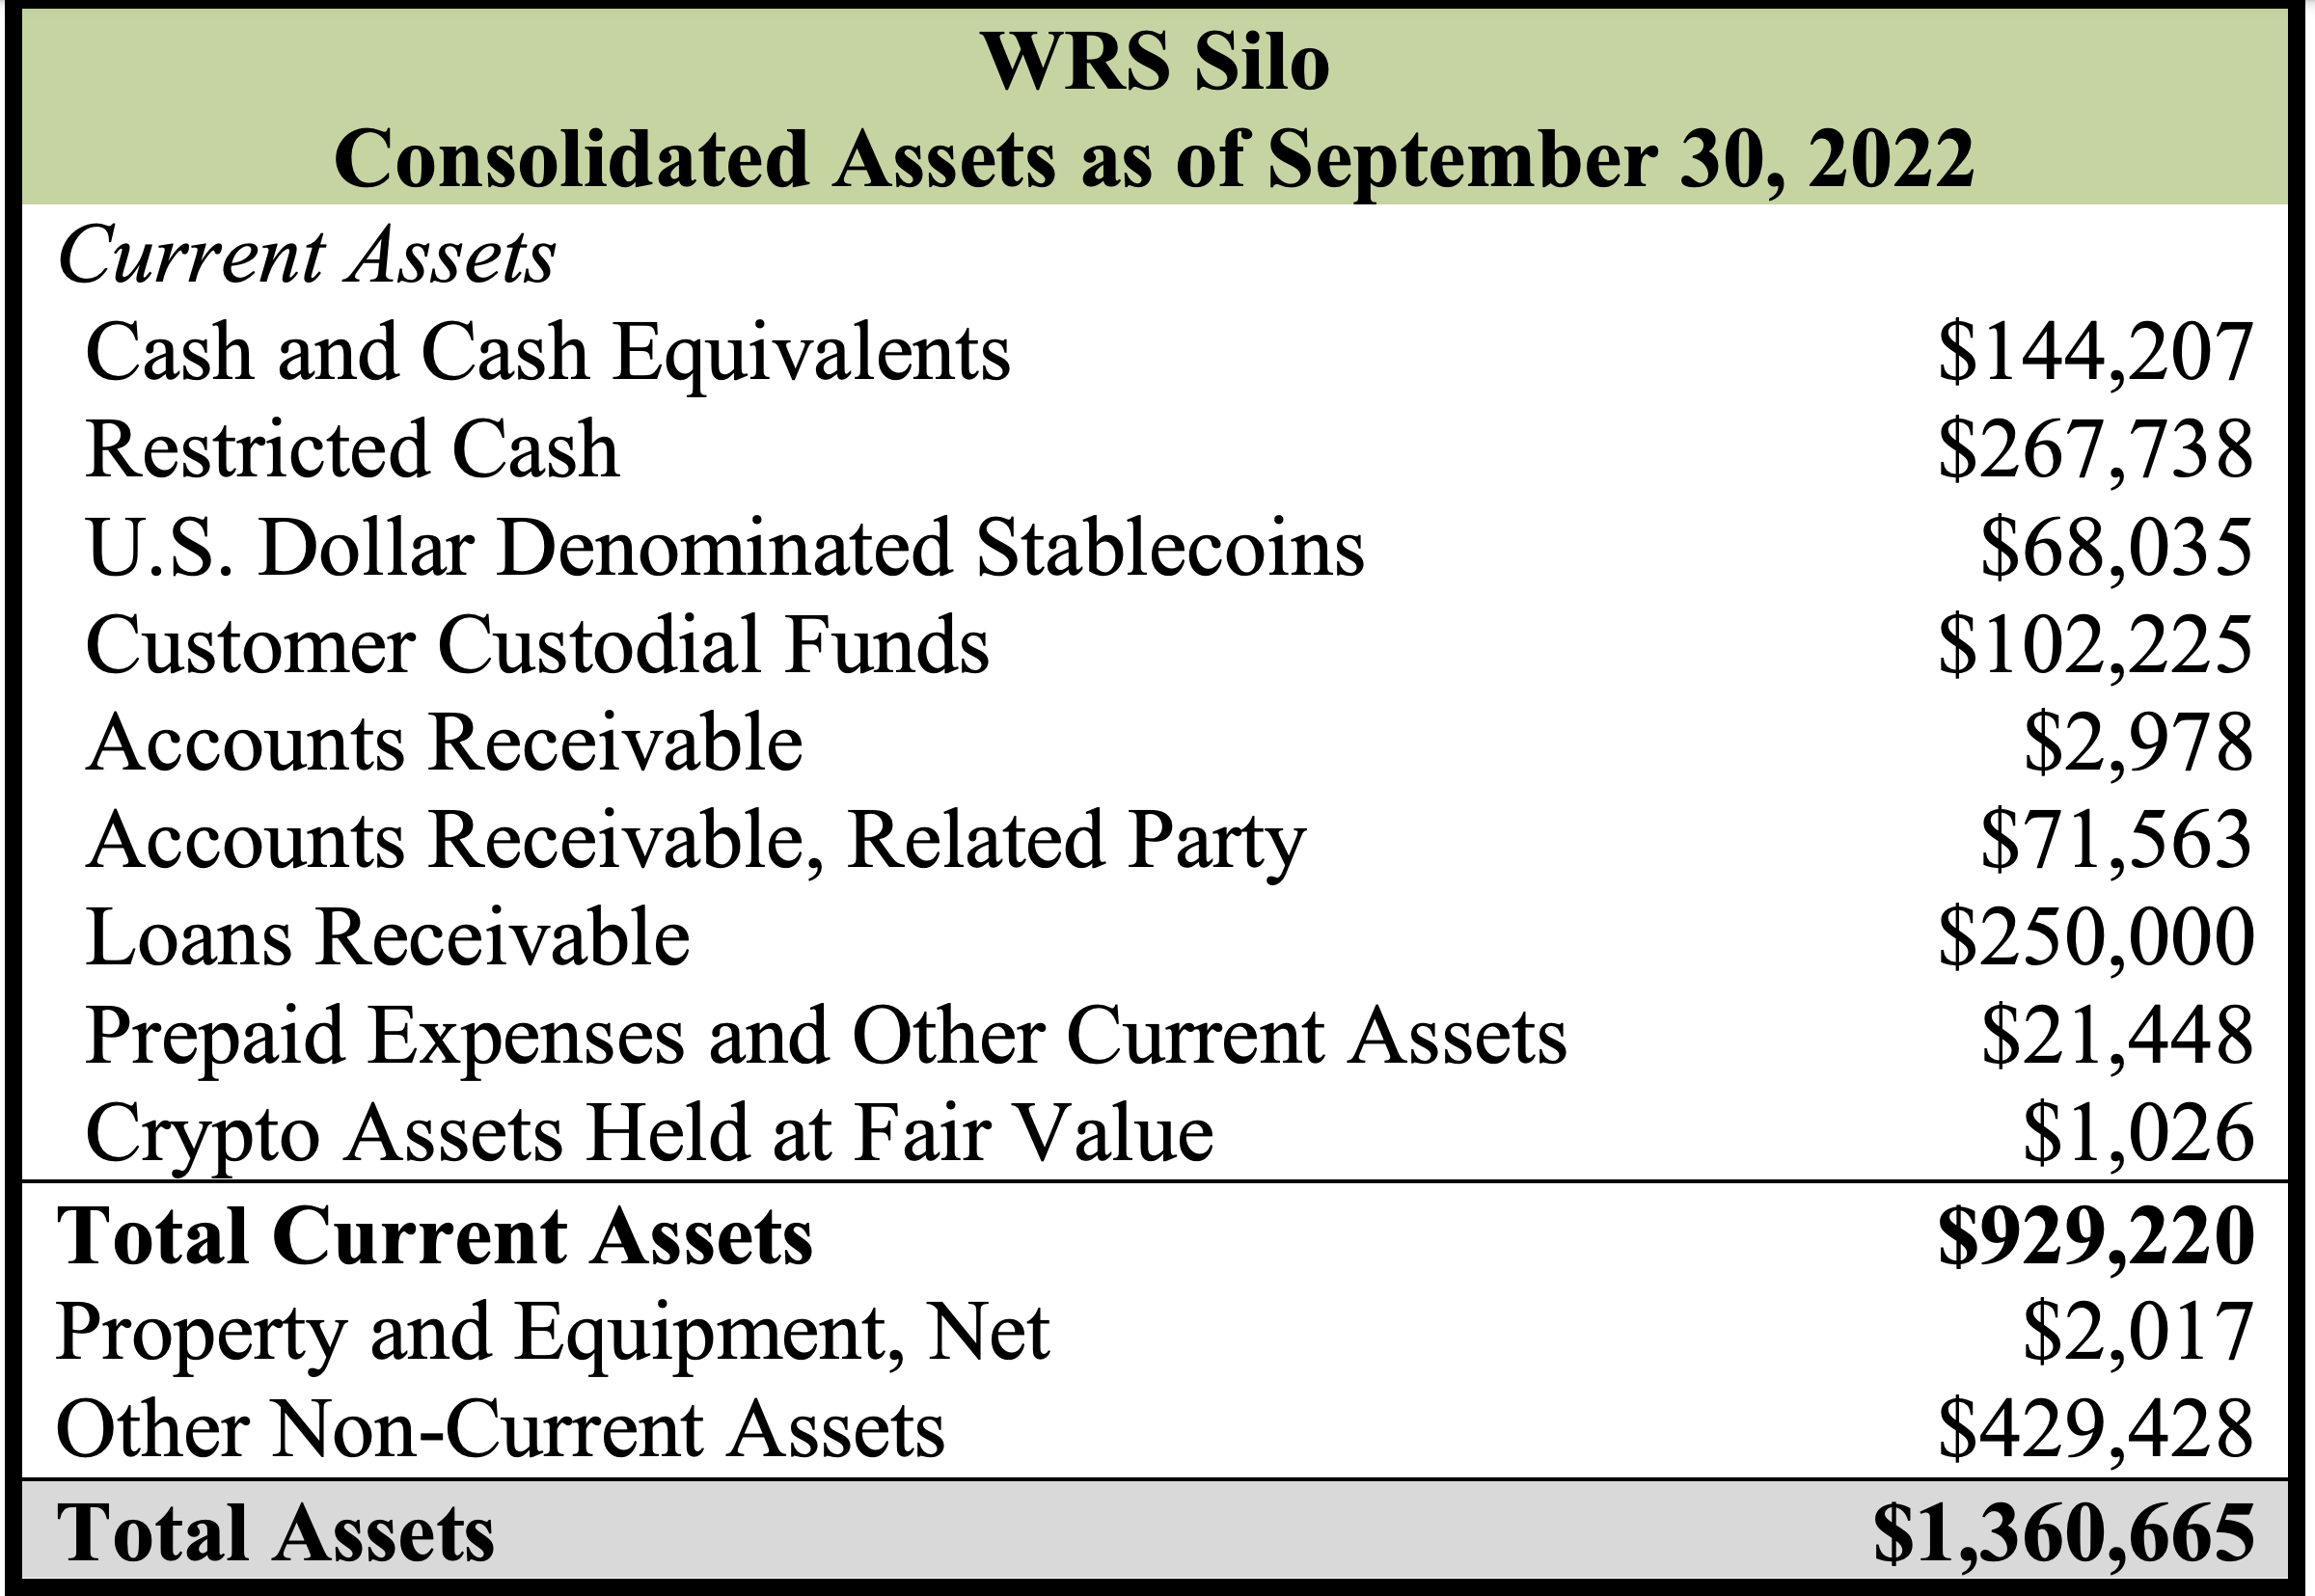 WRS Silo Balance Sheet - Total Assets as of Sept 30, 2022